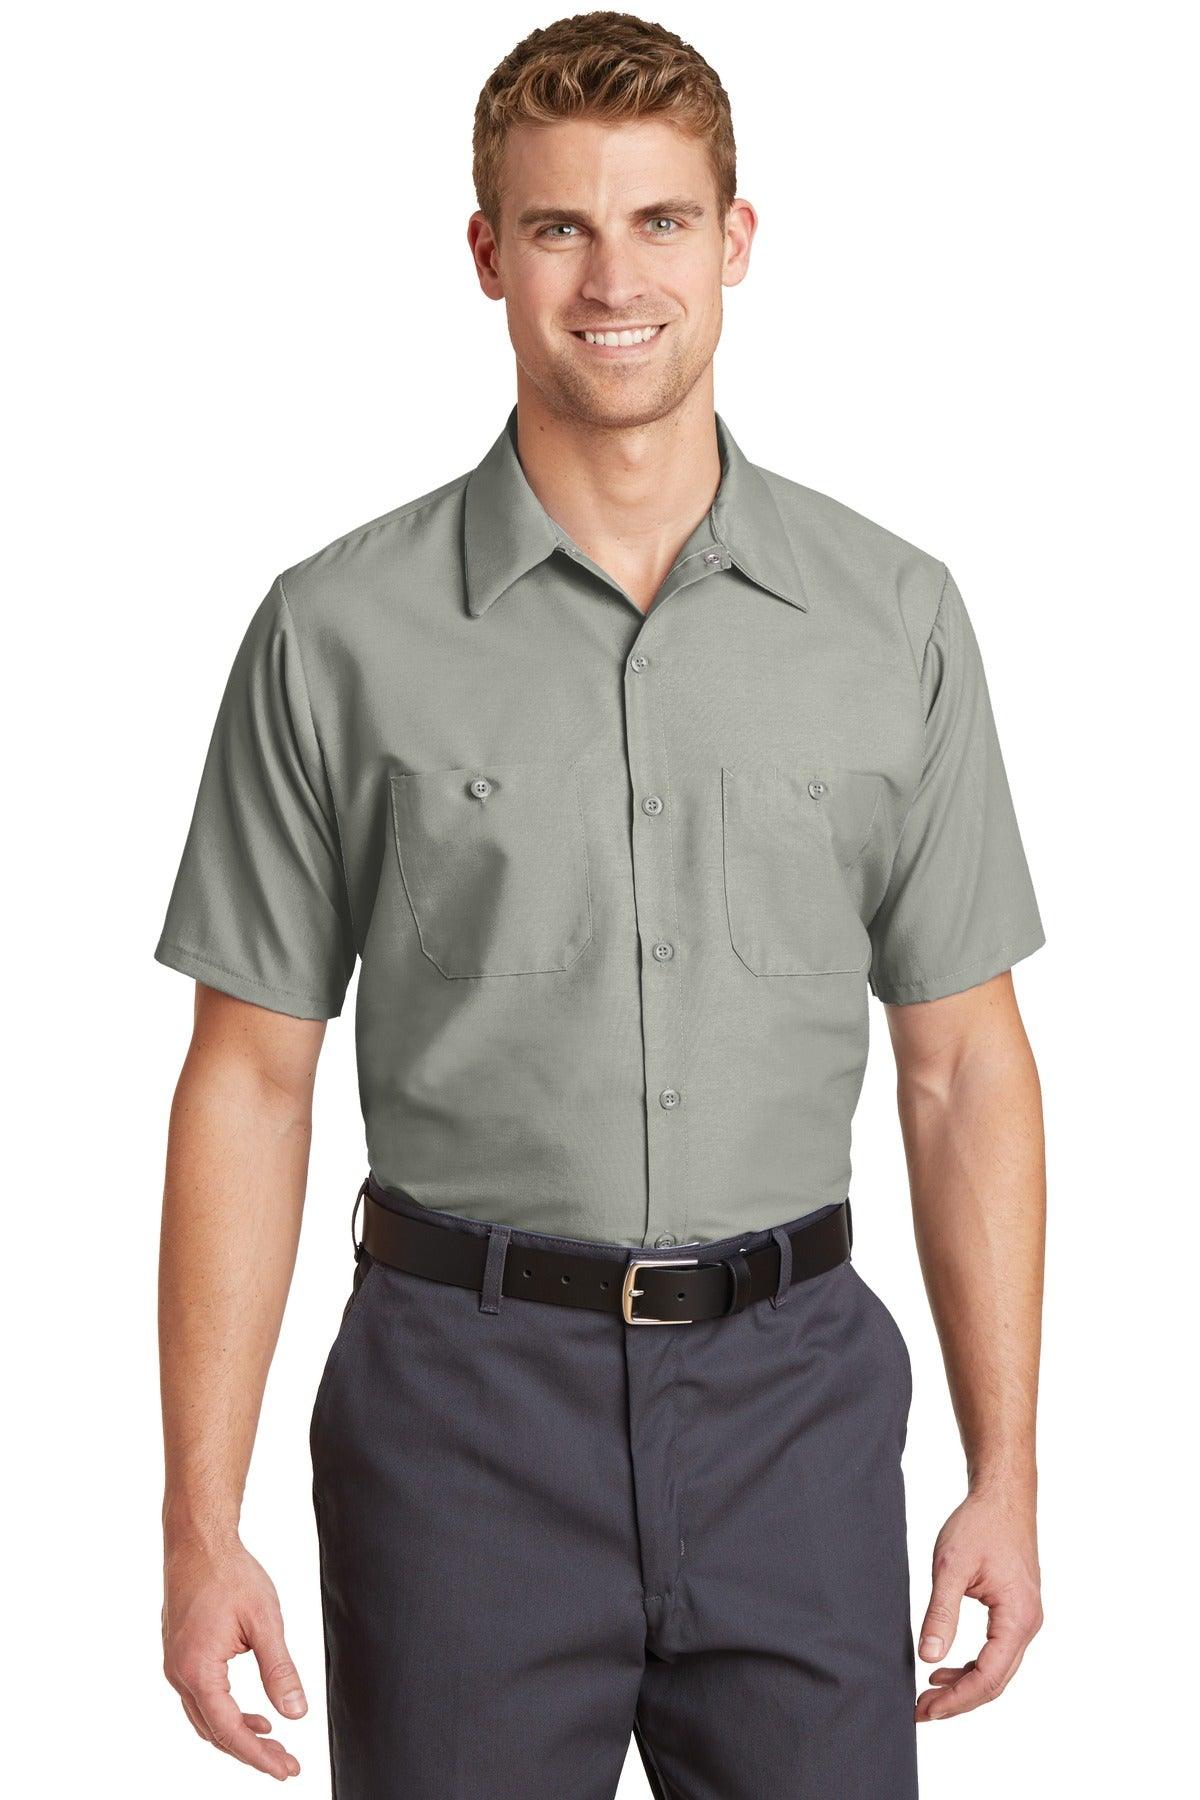 Red Kap Long Size, Short Sleeve Industrial Work Shirt. SP24LONG - Dresses Max